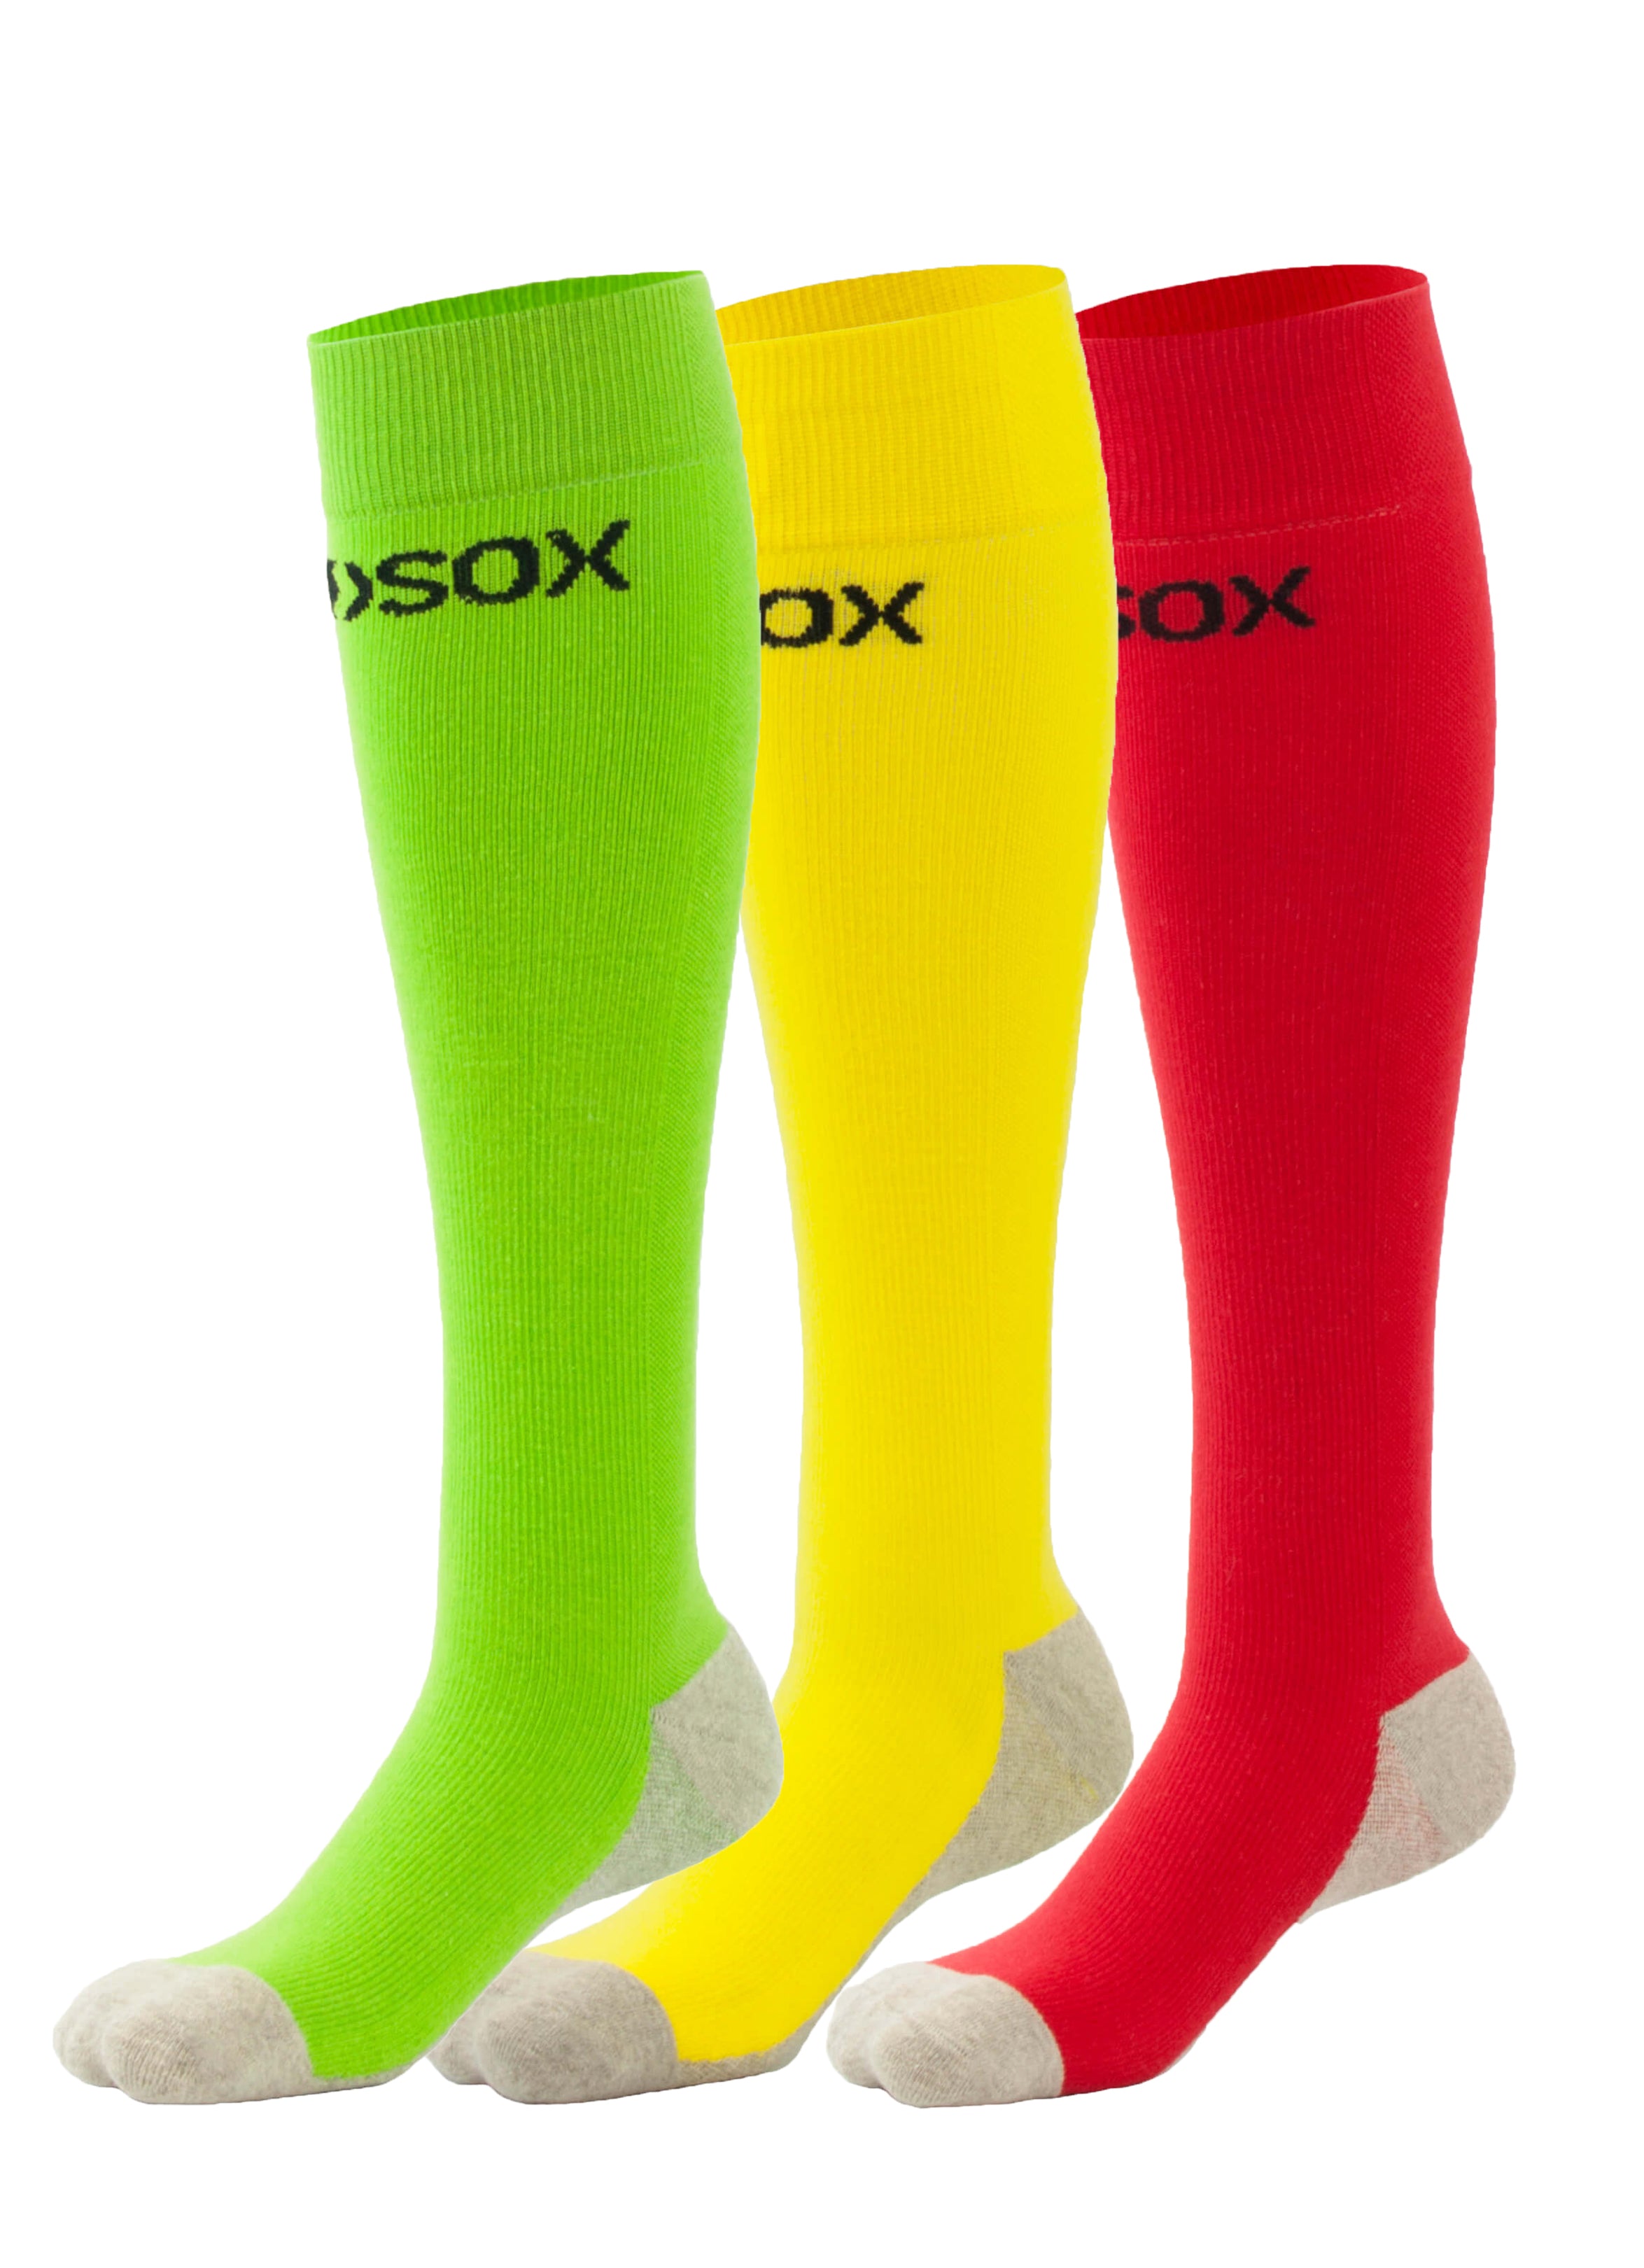 MDSOX 20-30mmHg 3PACK - Green, Yellow, Red